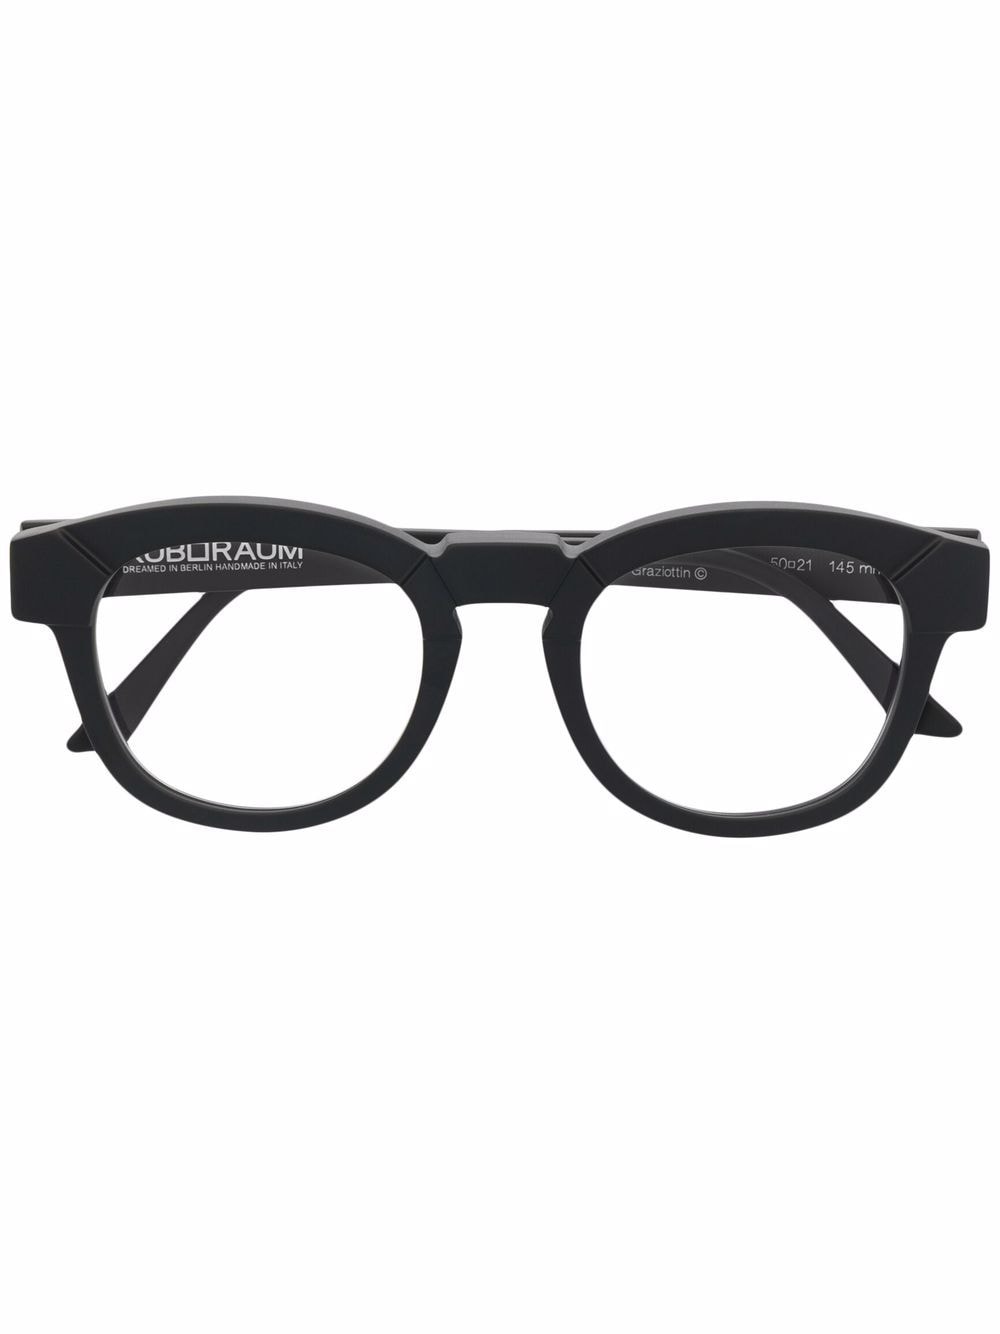 Kuboraum K16 round-frame glasses - Black von Kuboraum